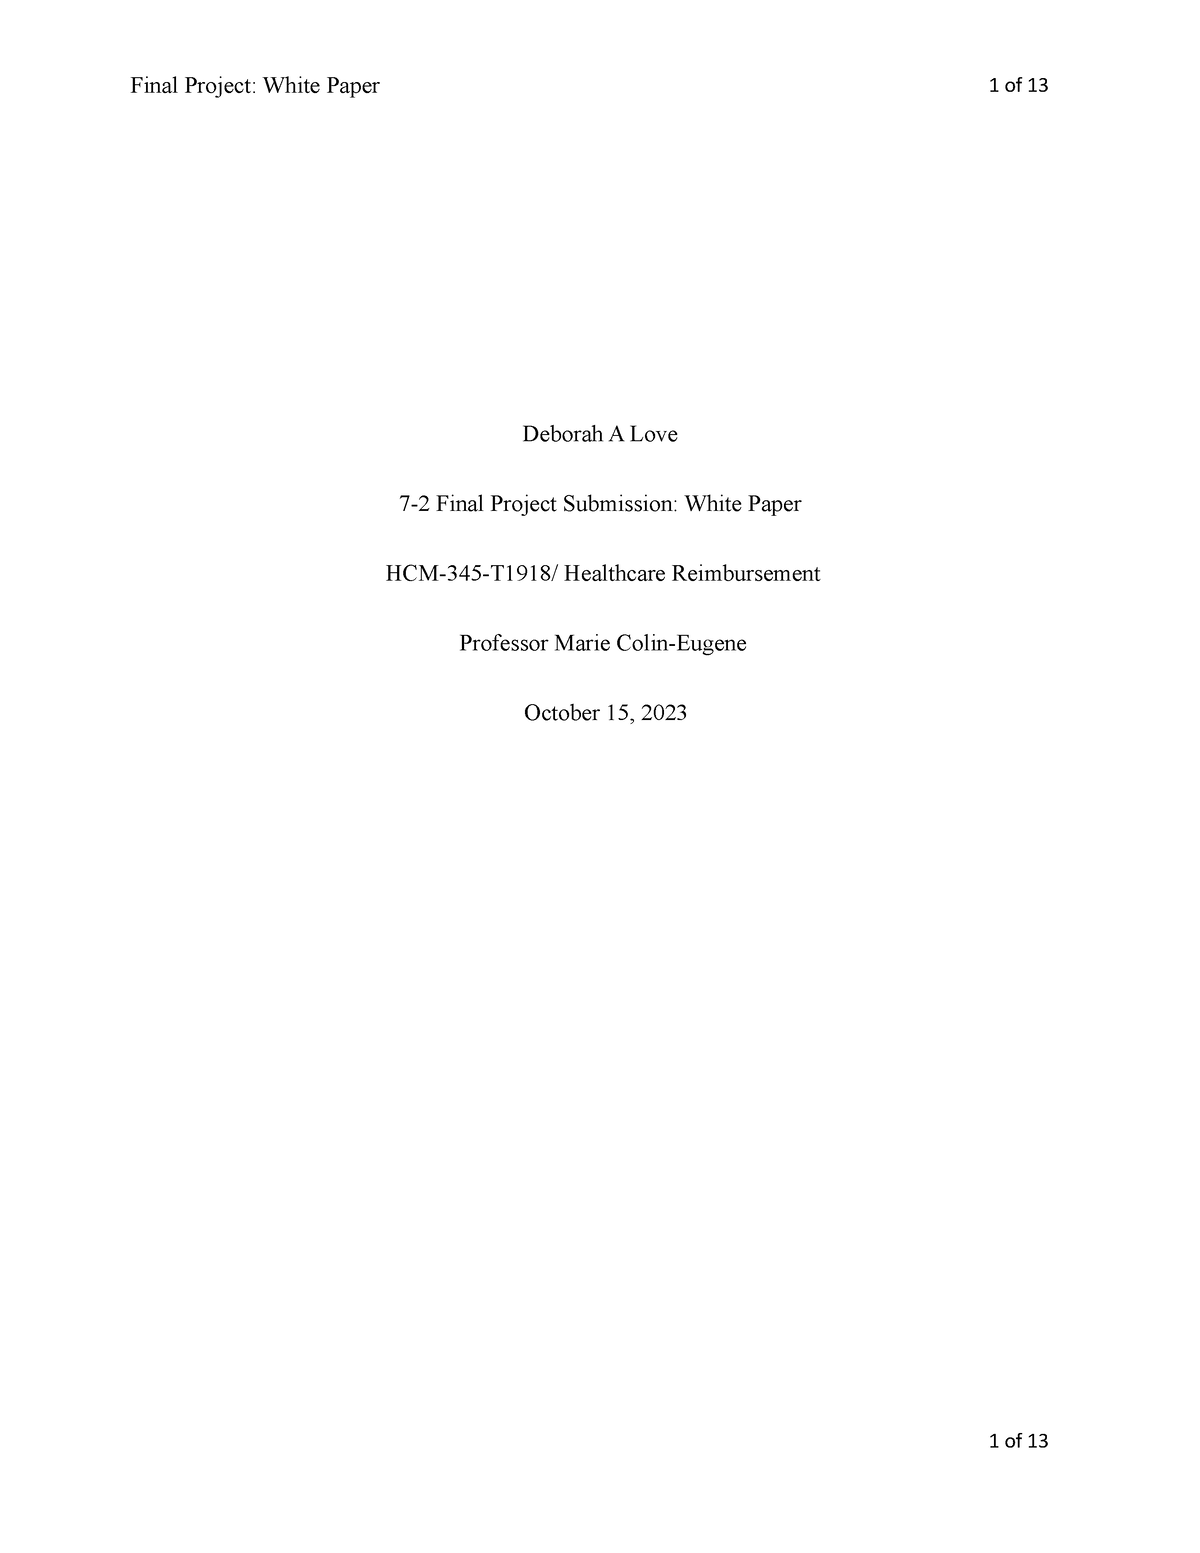 White Paper - Deborah A Love 7-2 Final Project Submission: White Paper ...